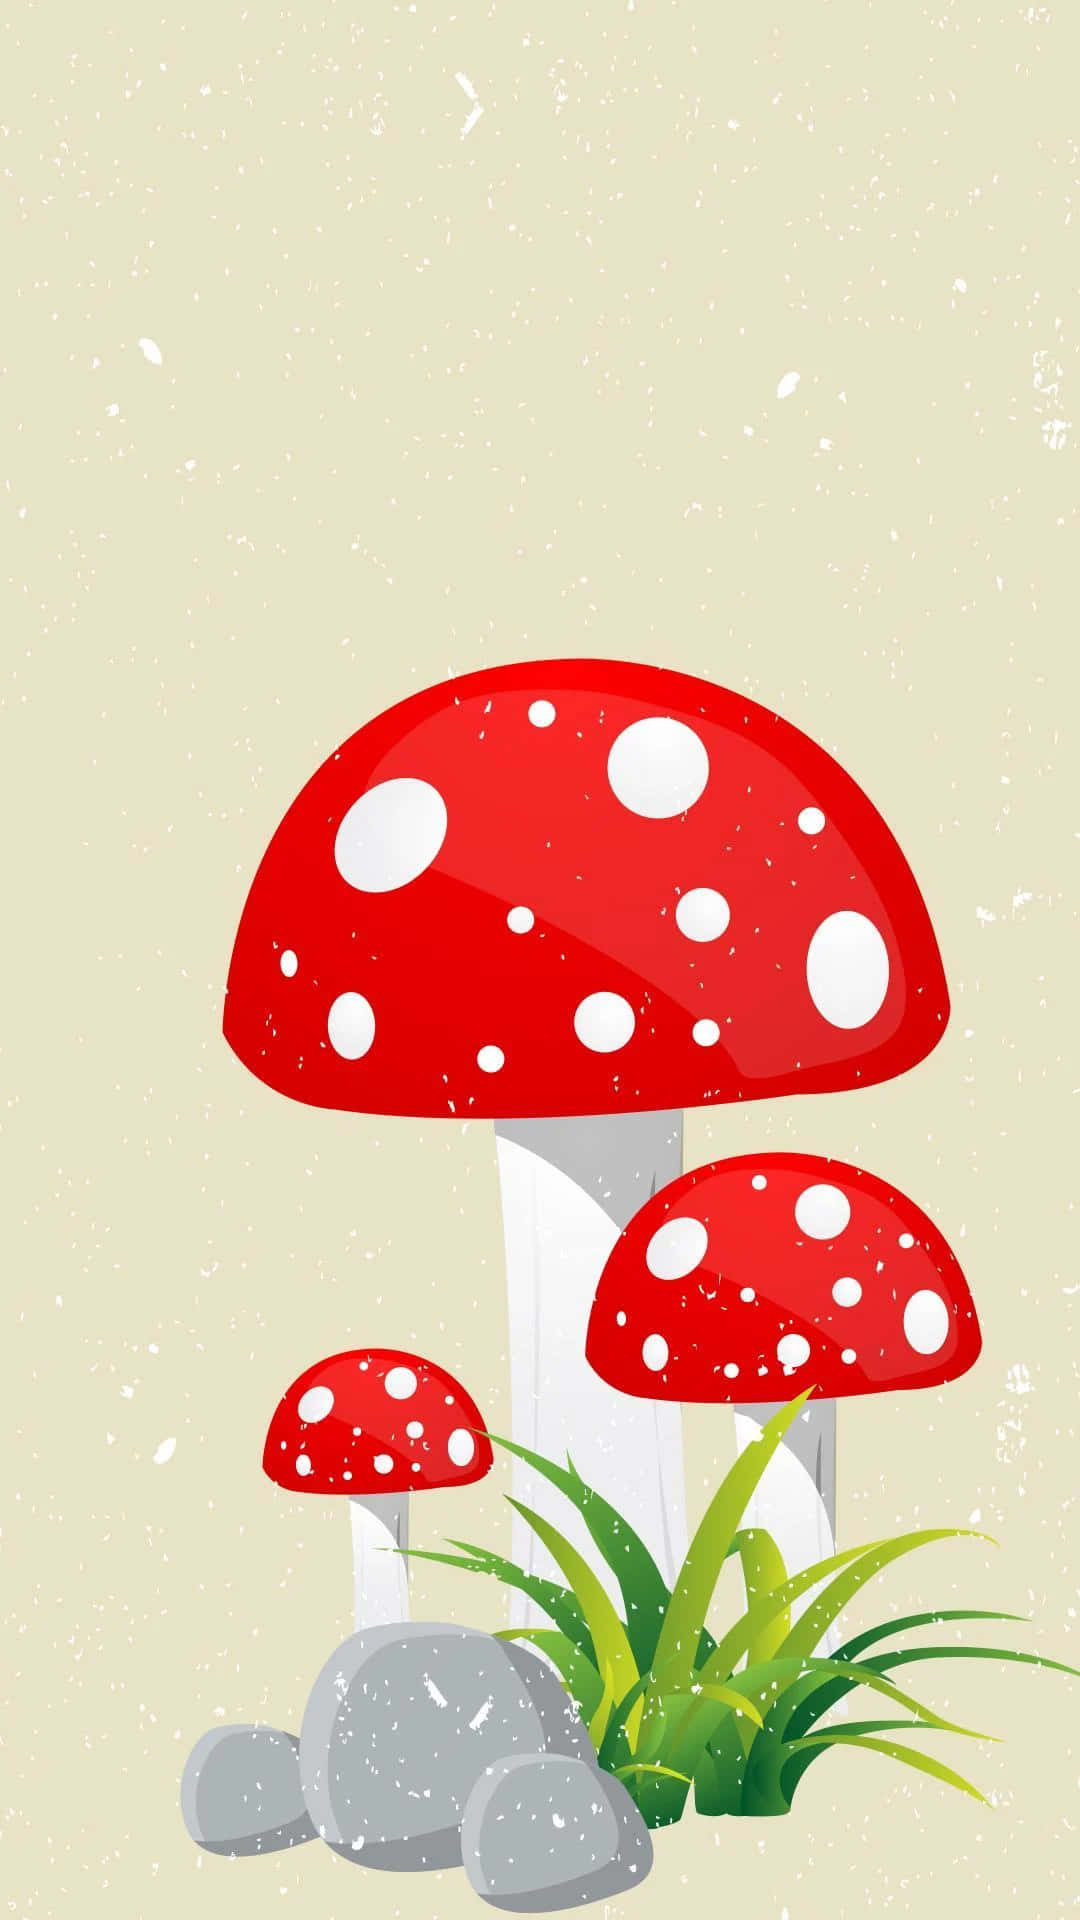 Cute and Adorable Kawaii Mushroom Wallpaper